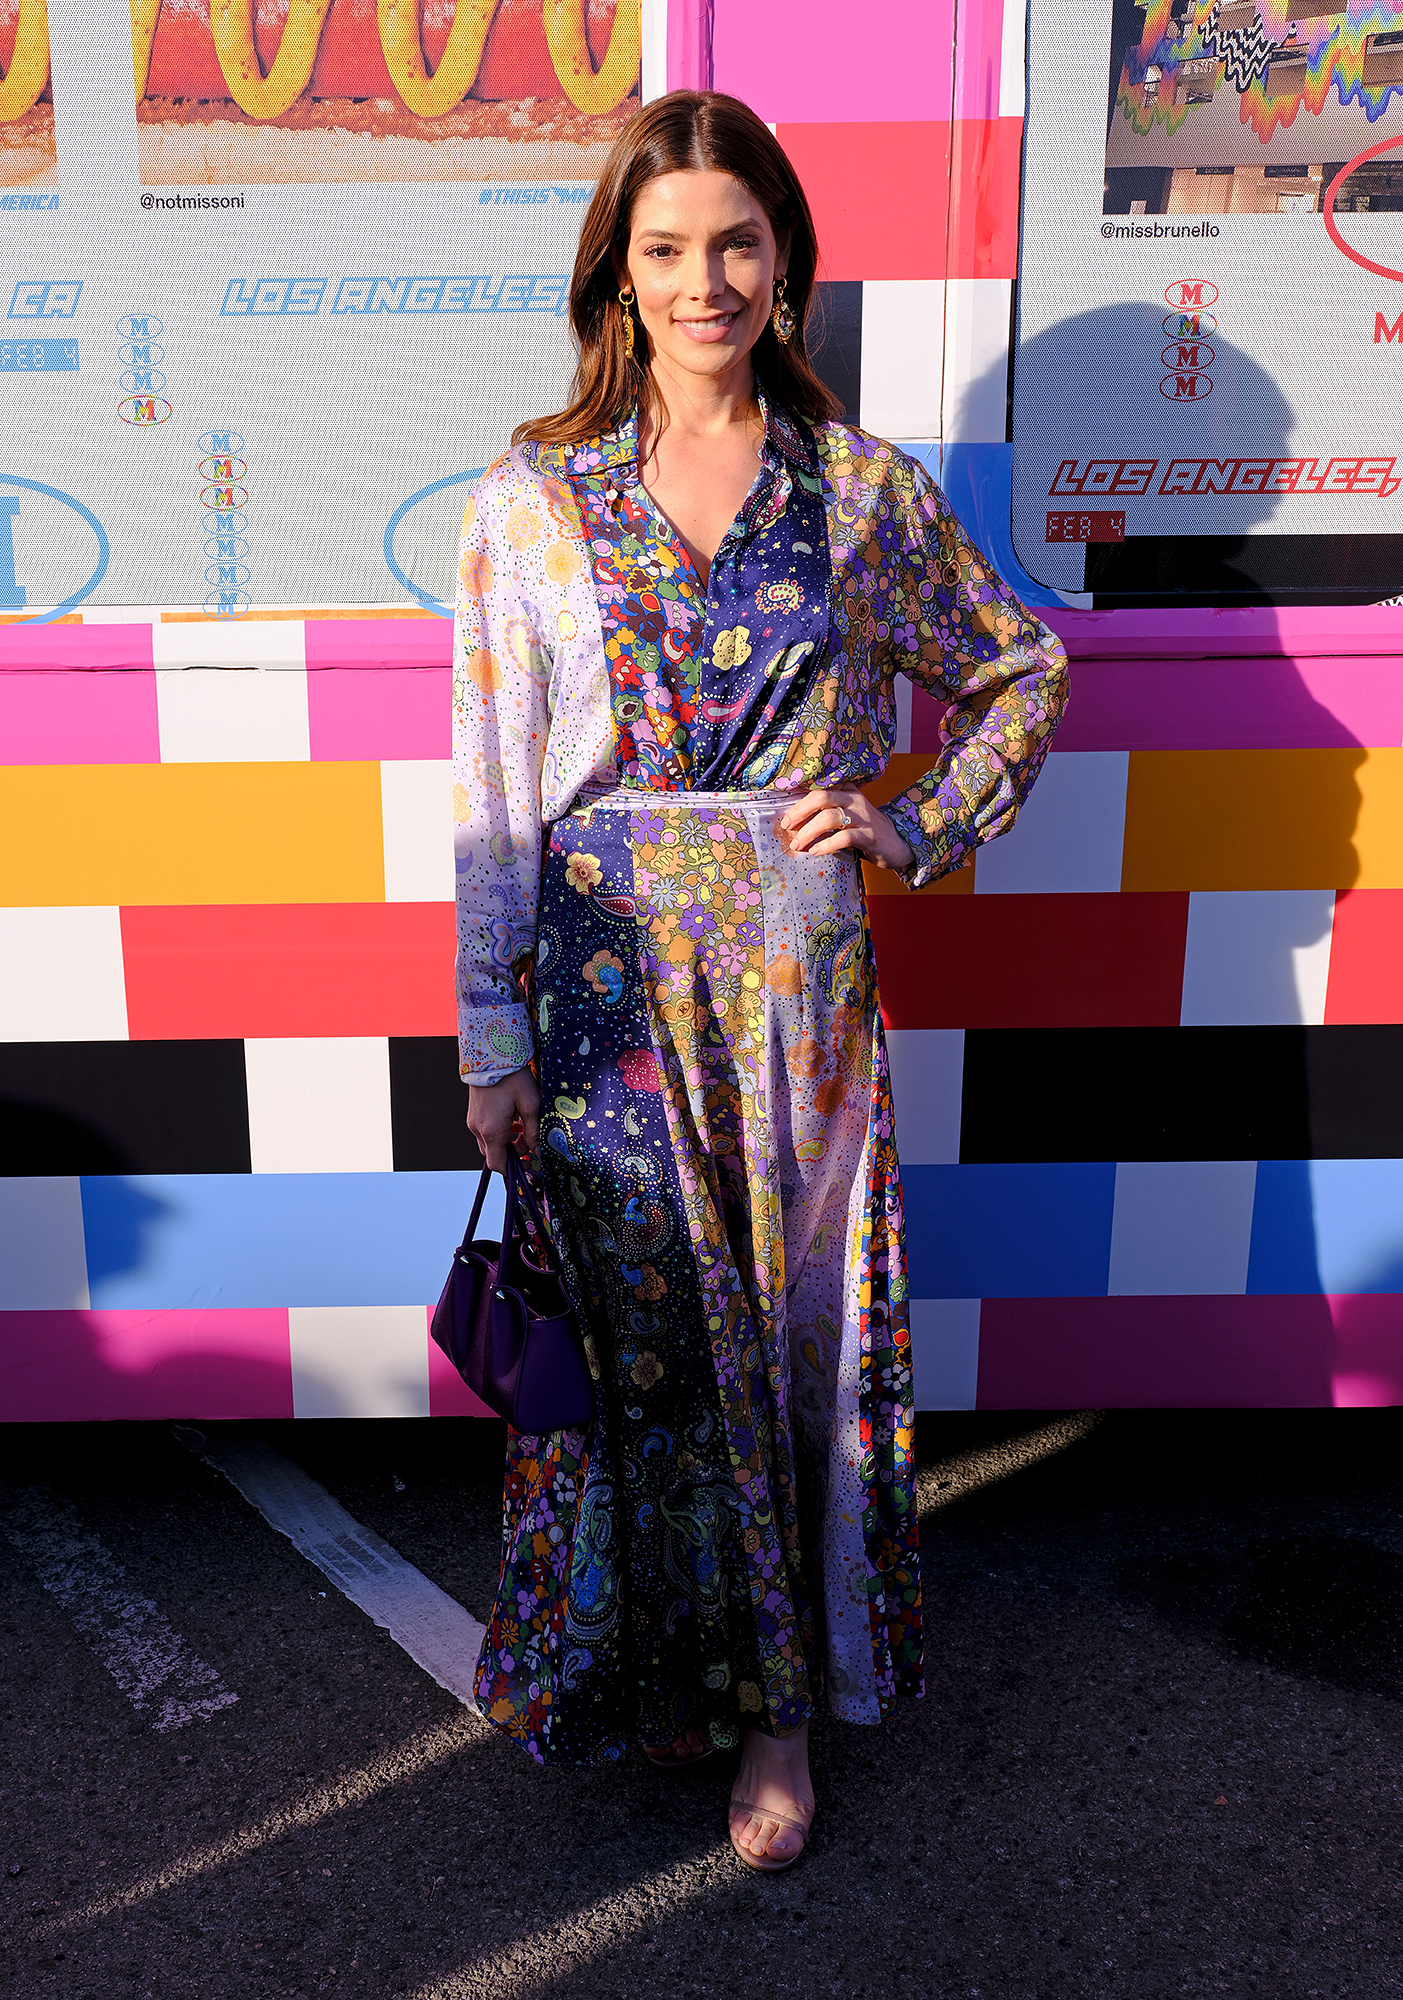 Ashley Greene Rocked a Floral Print Dress to the M Missoni Fashion Presentation